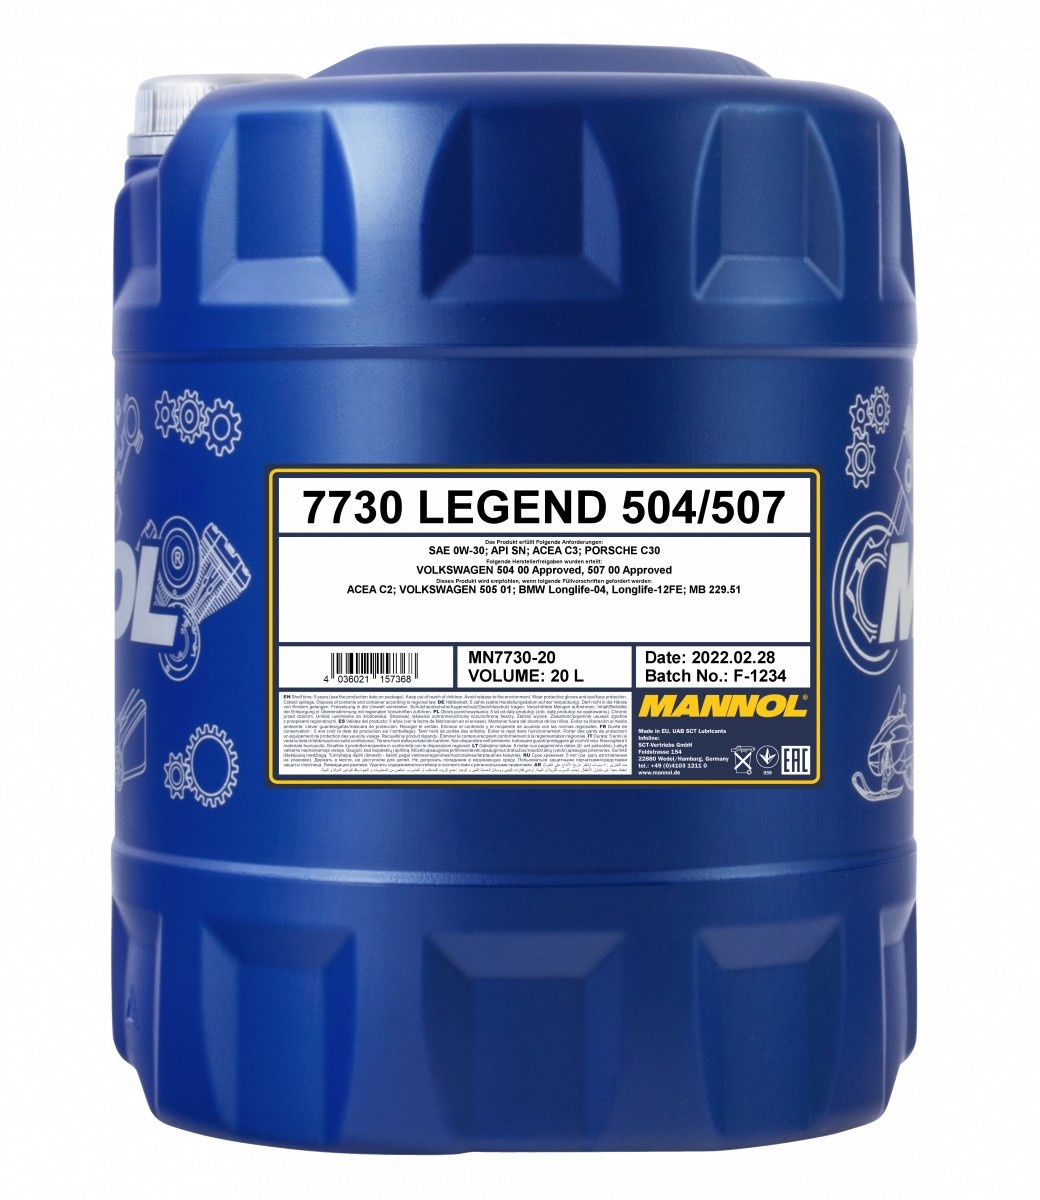 Моторное масло Mannol Legend 504/507 0W-30 7730 20L